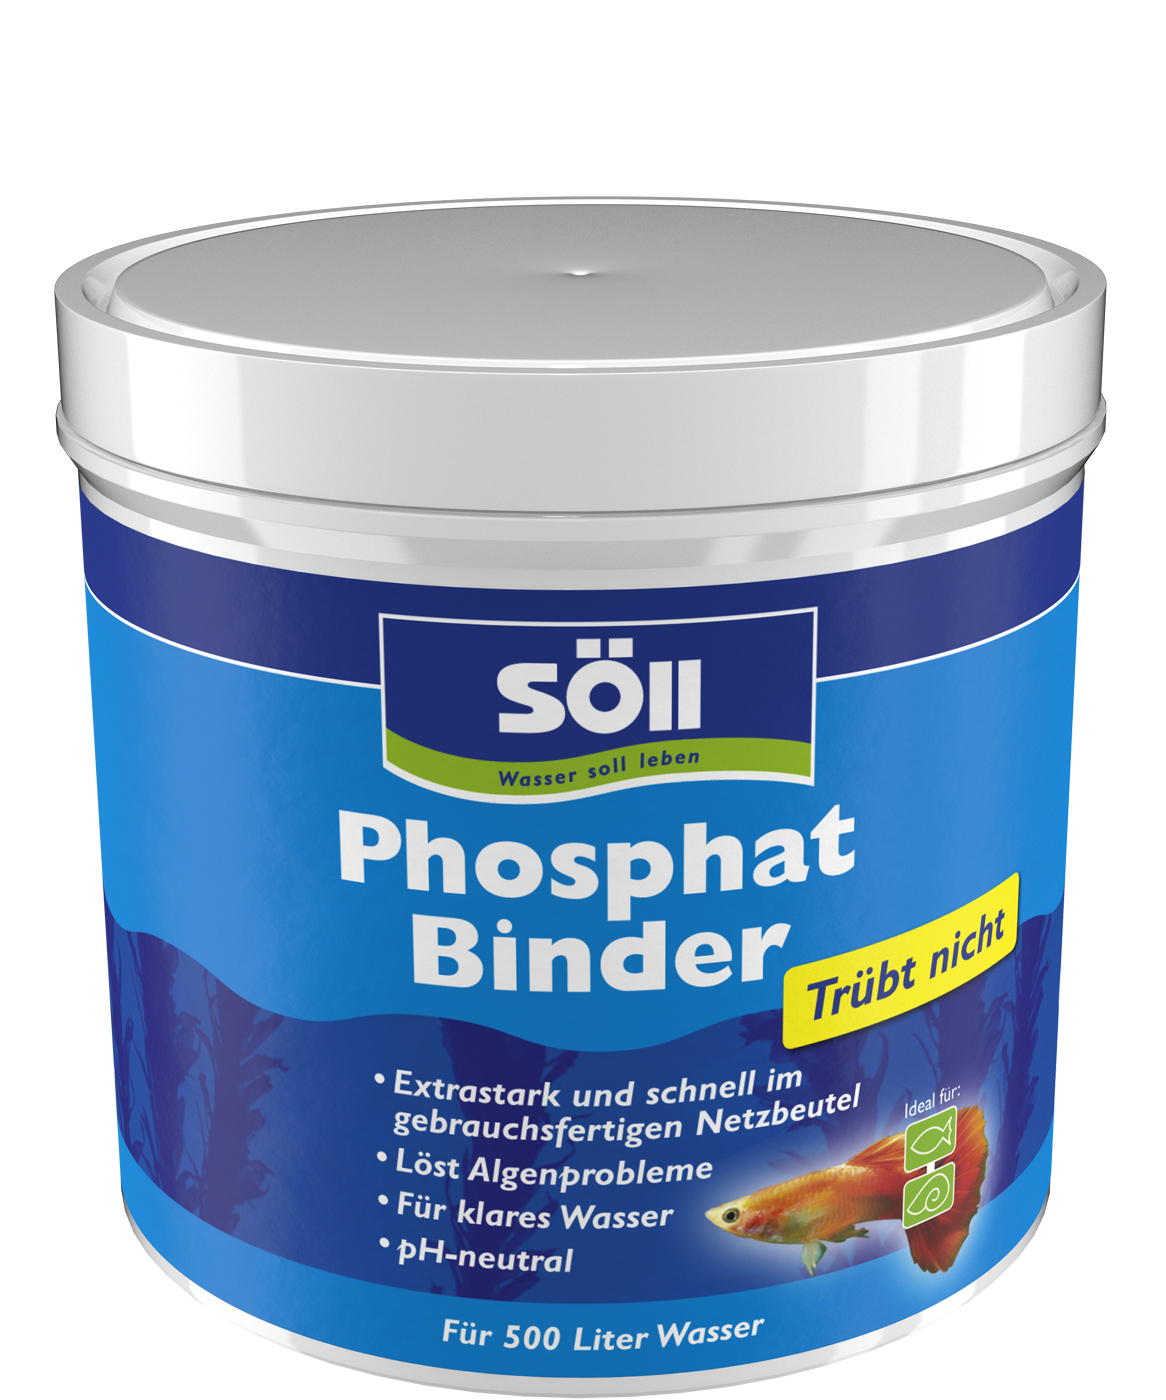 PhosphatBinder